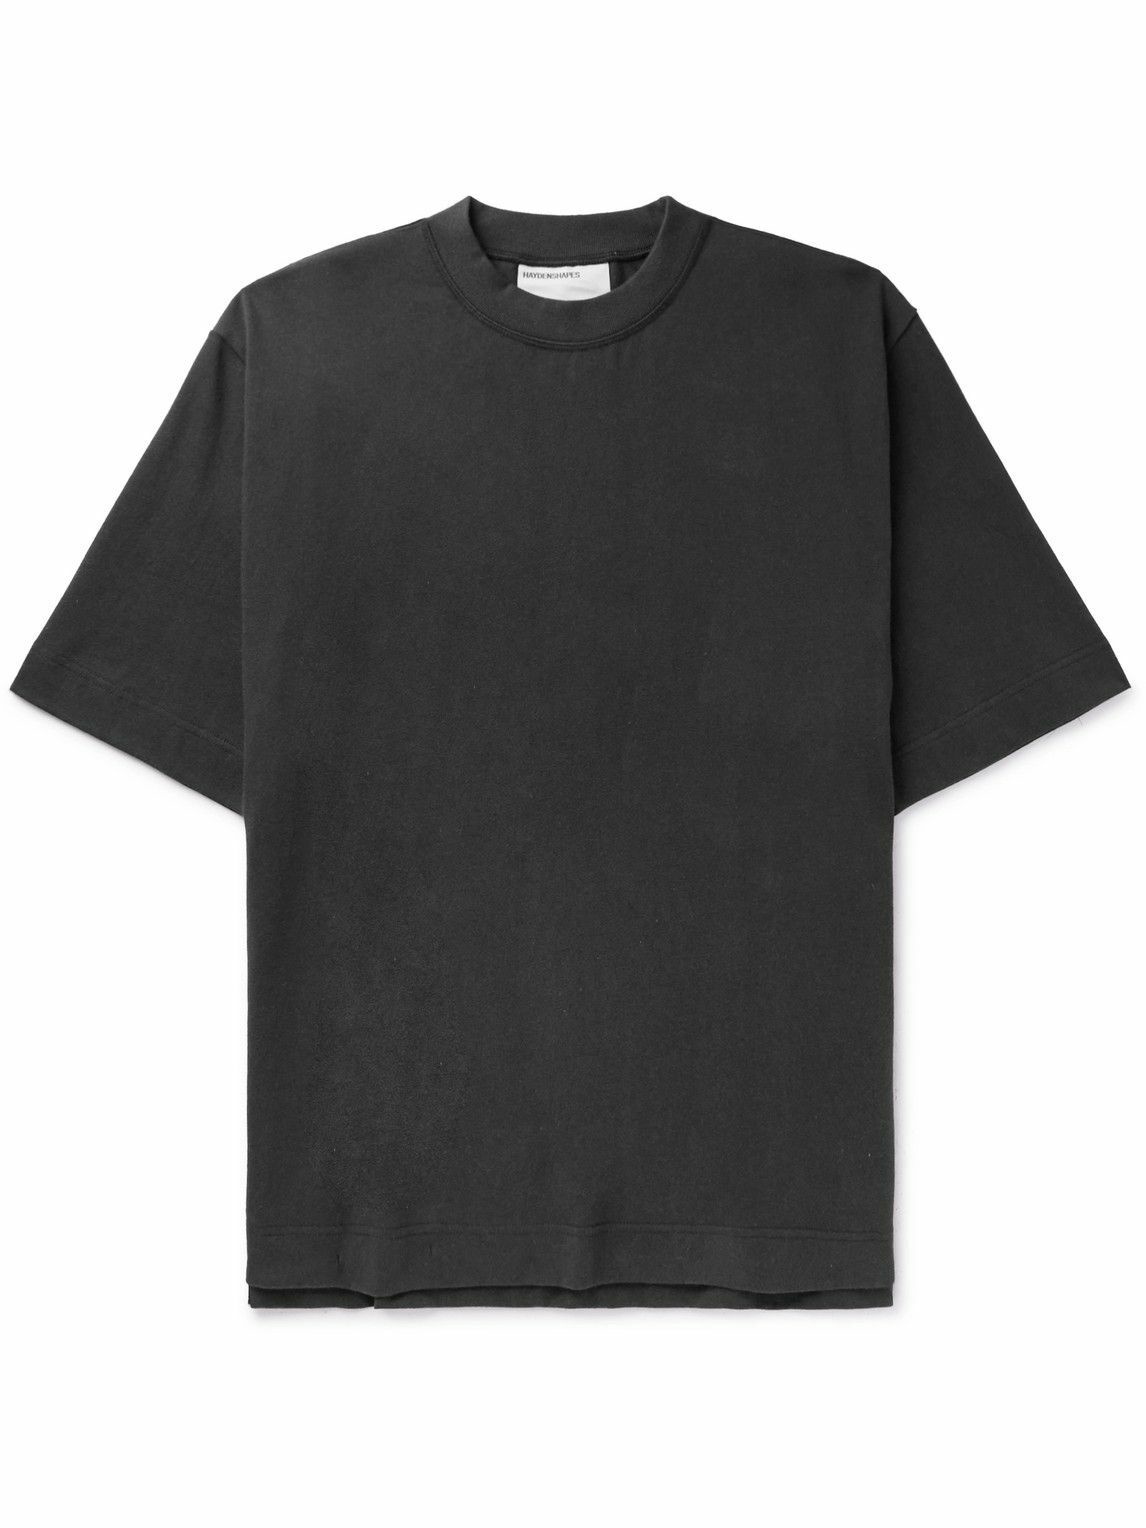 HAYDENSHAPES - Volume Cotton-Jersey T-Shirt - Black HAYDENSHAPES